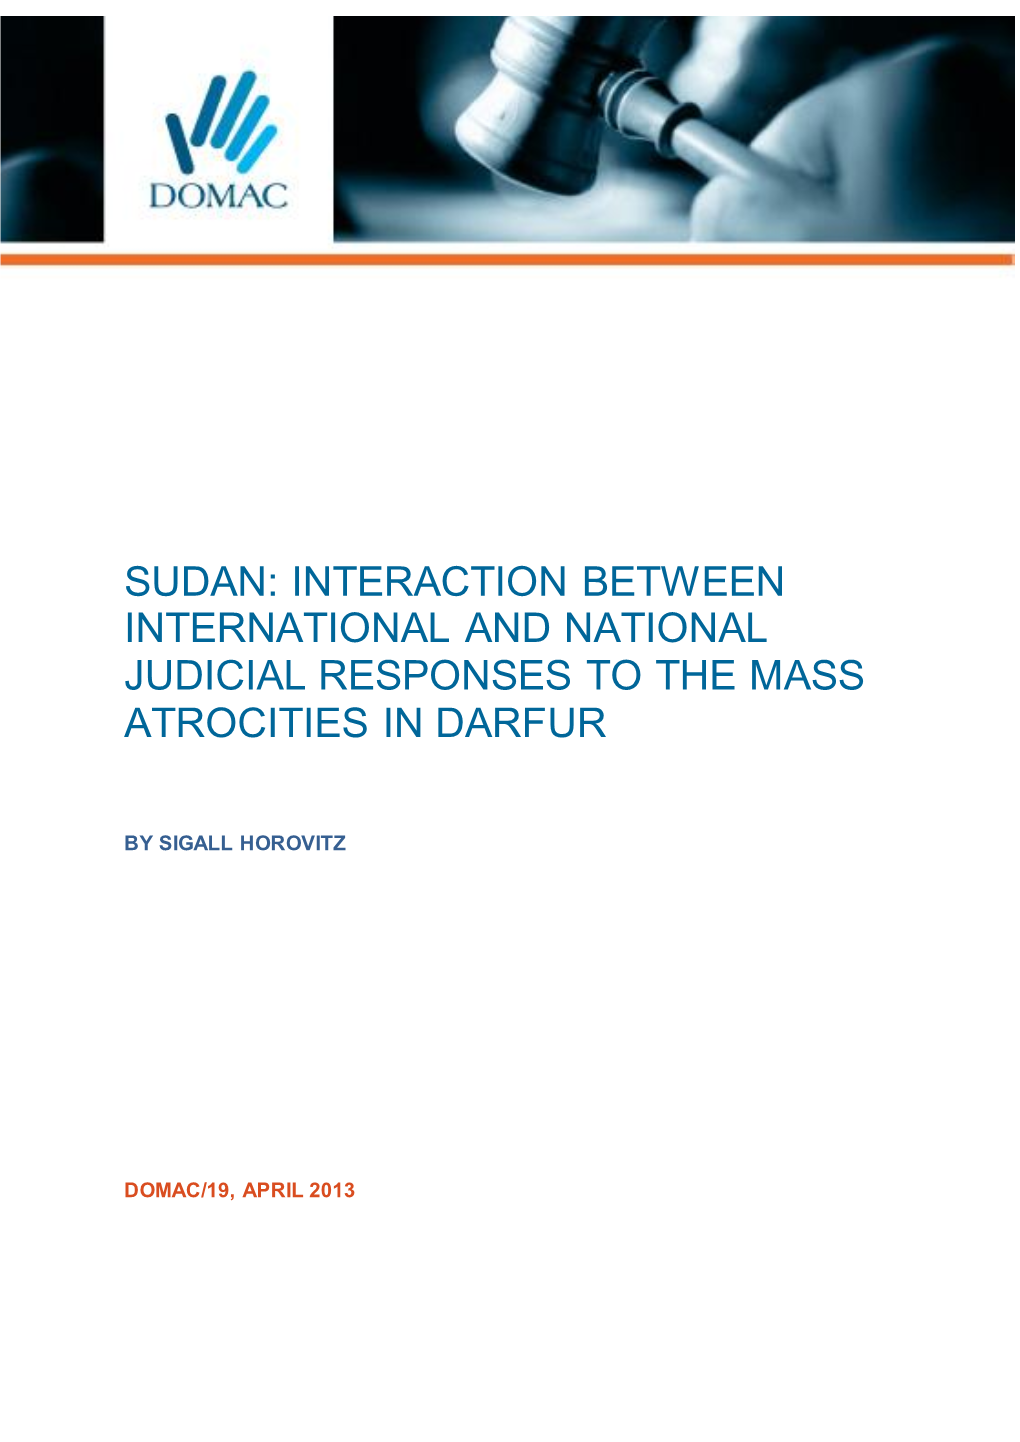 Sudan: Interaction Between International and National Judicial Responses to the Mass Atrocities in Darfur